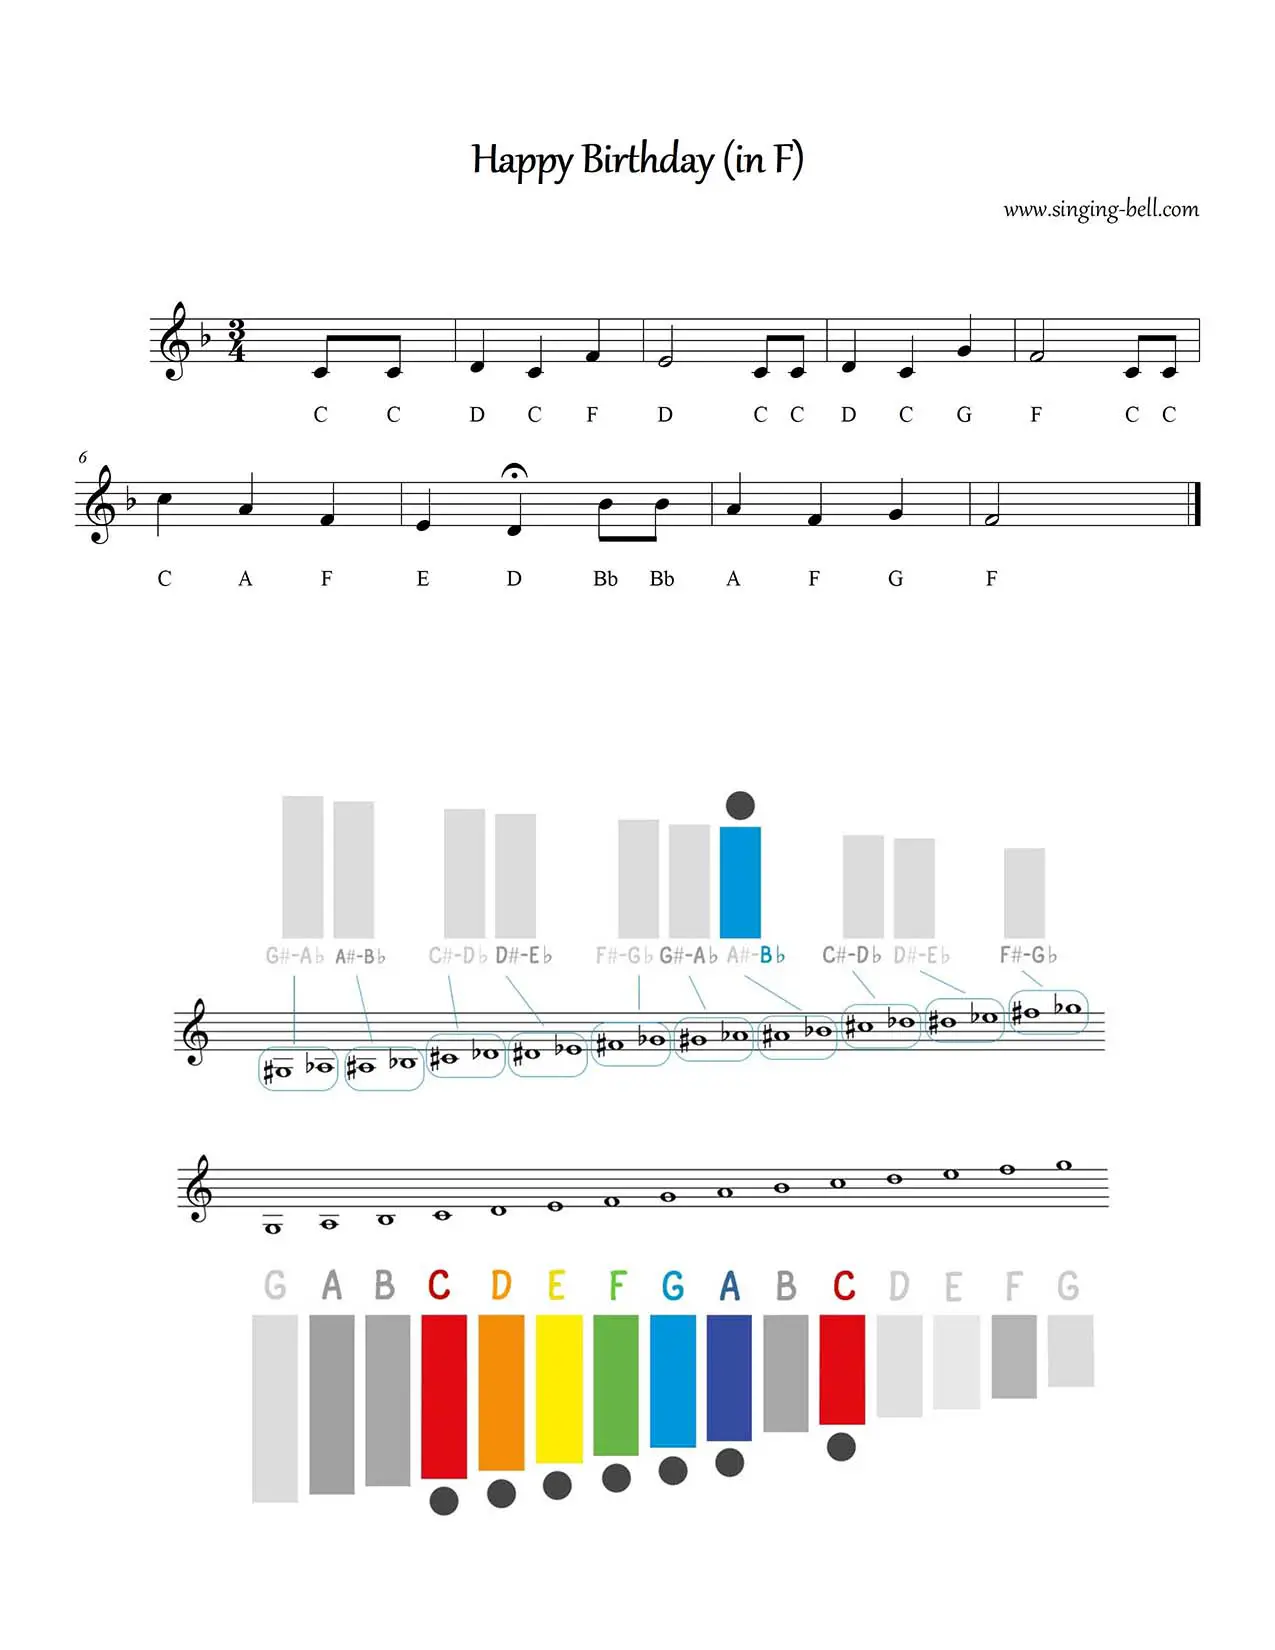 Happy Birthday free xylophone glockenspiel sheet music notes chart pdf in F